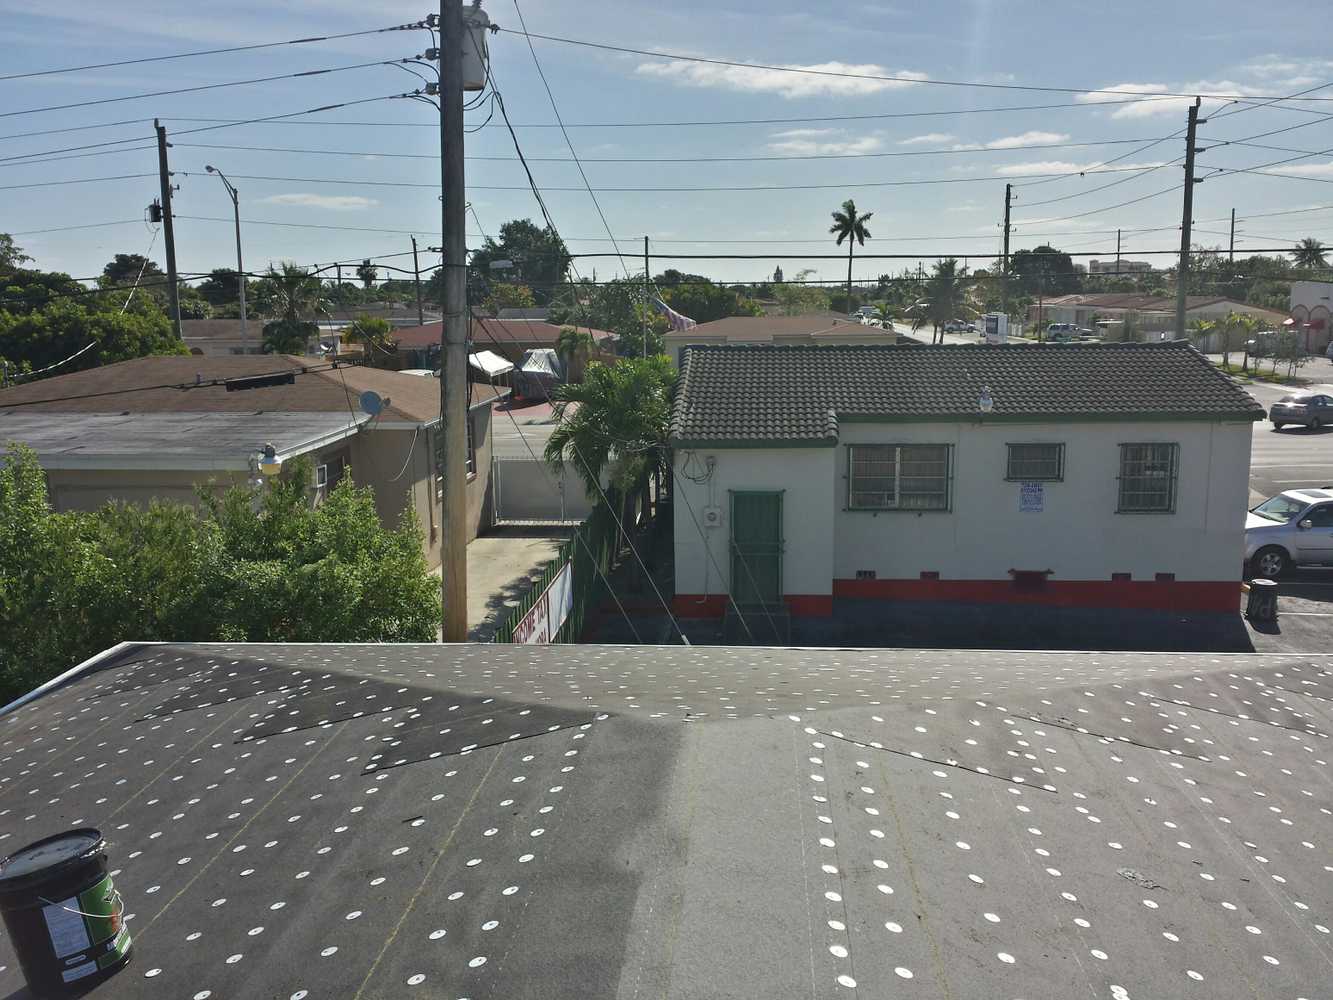 Shingle and Flat Roof Miami